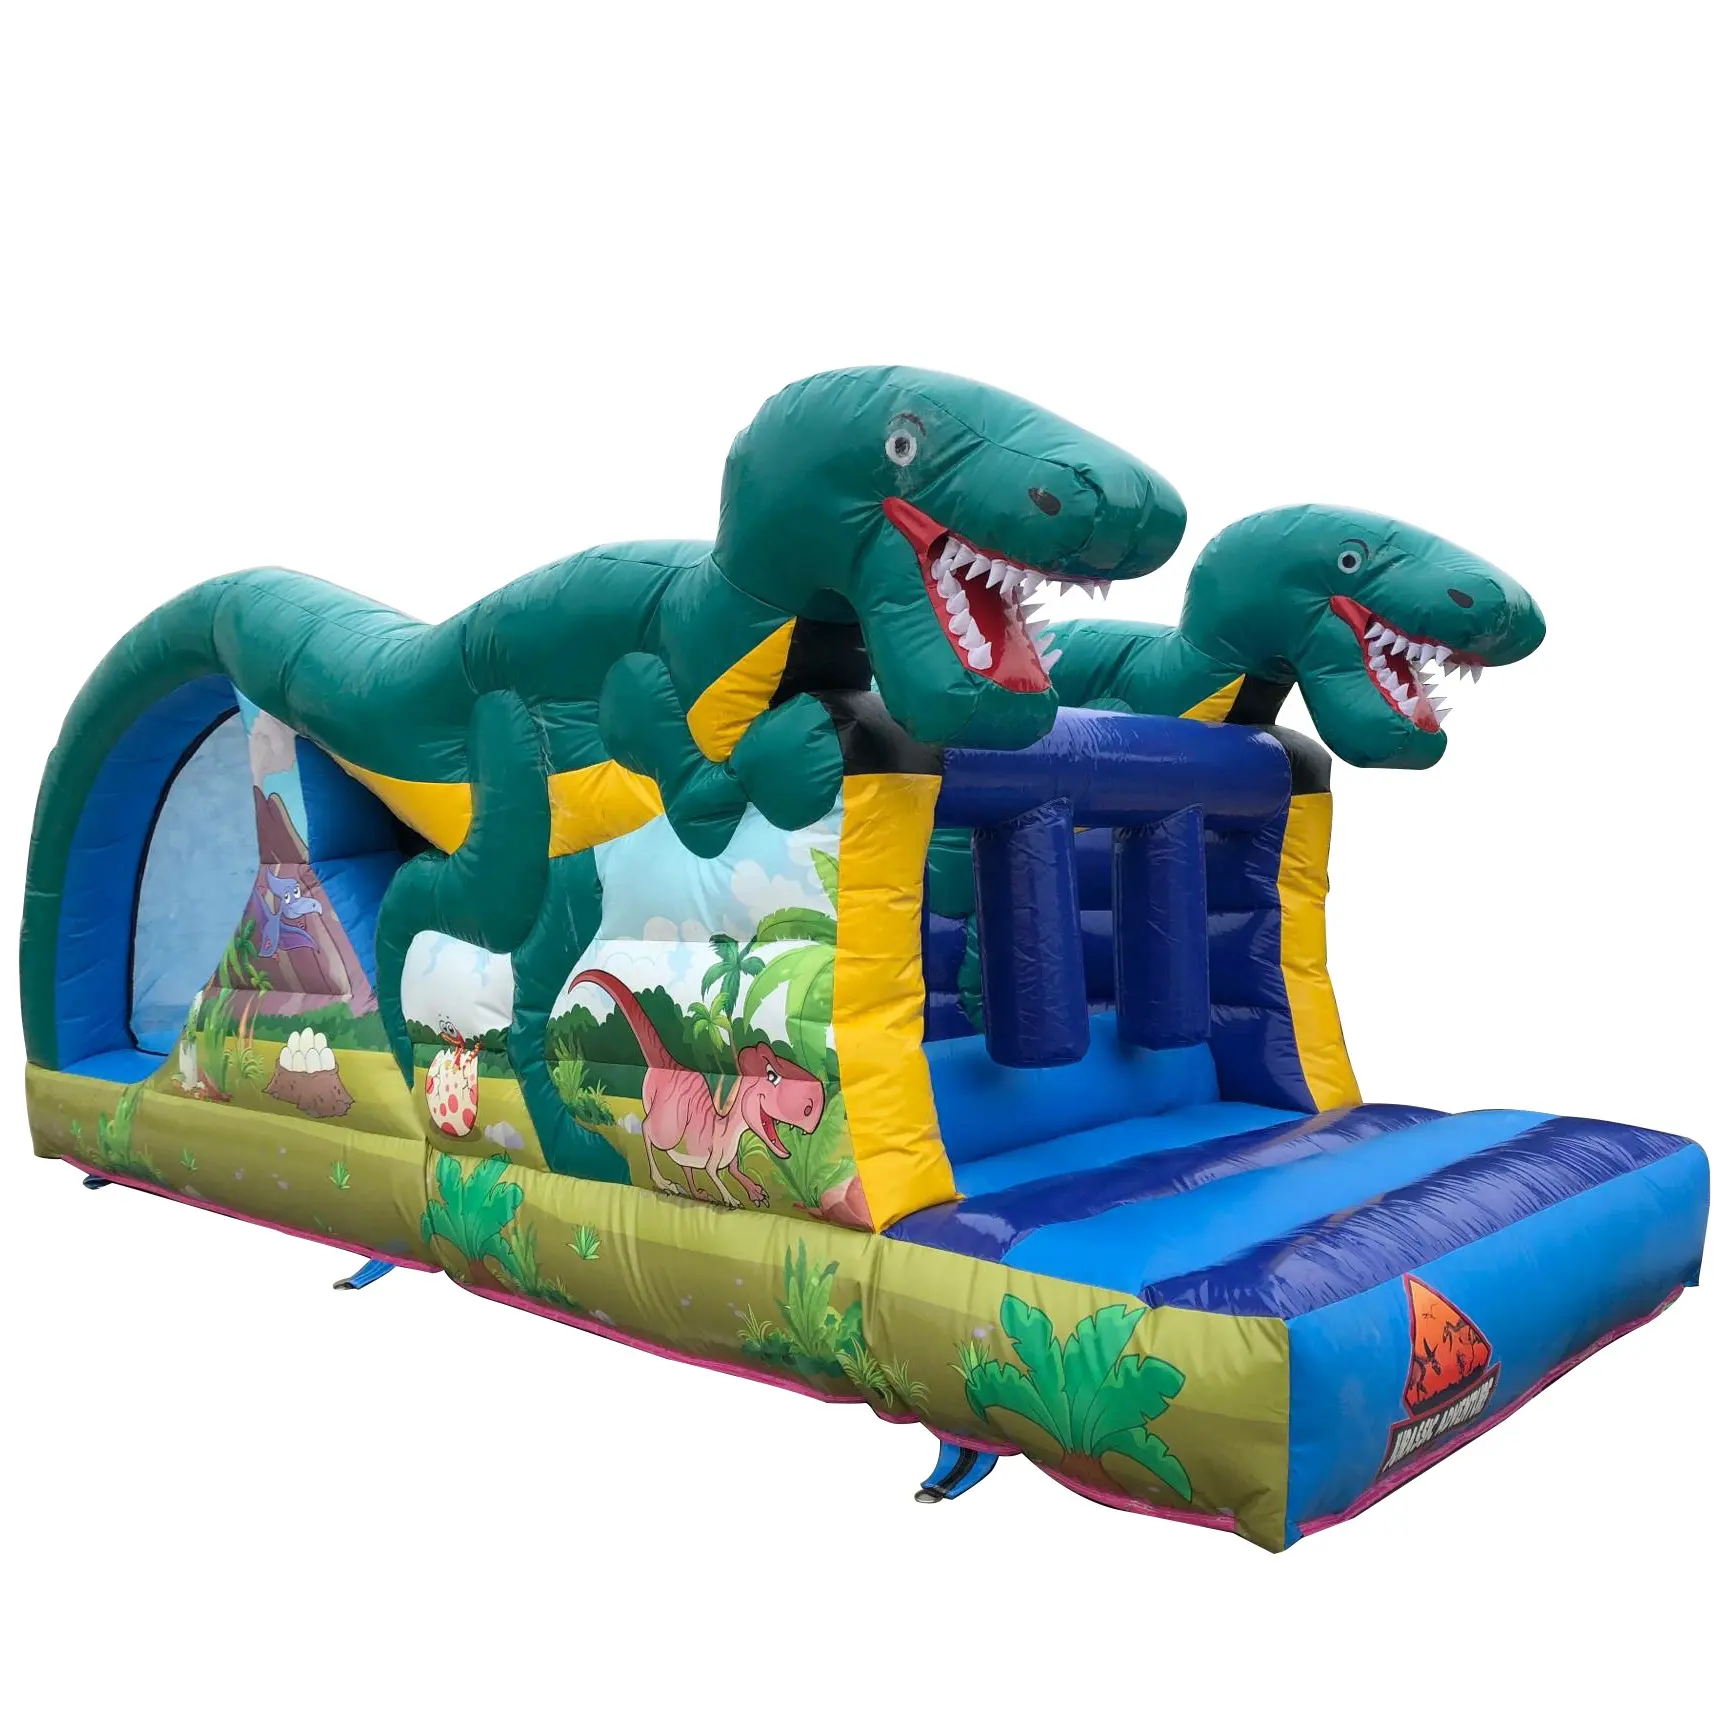 Komersial Dinosaurus Tiup Castle Bouncy Jumping Bouncer untuk Pesta Anak-anak